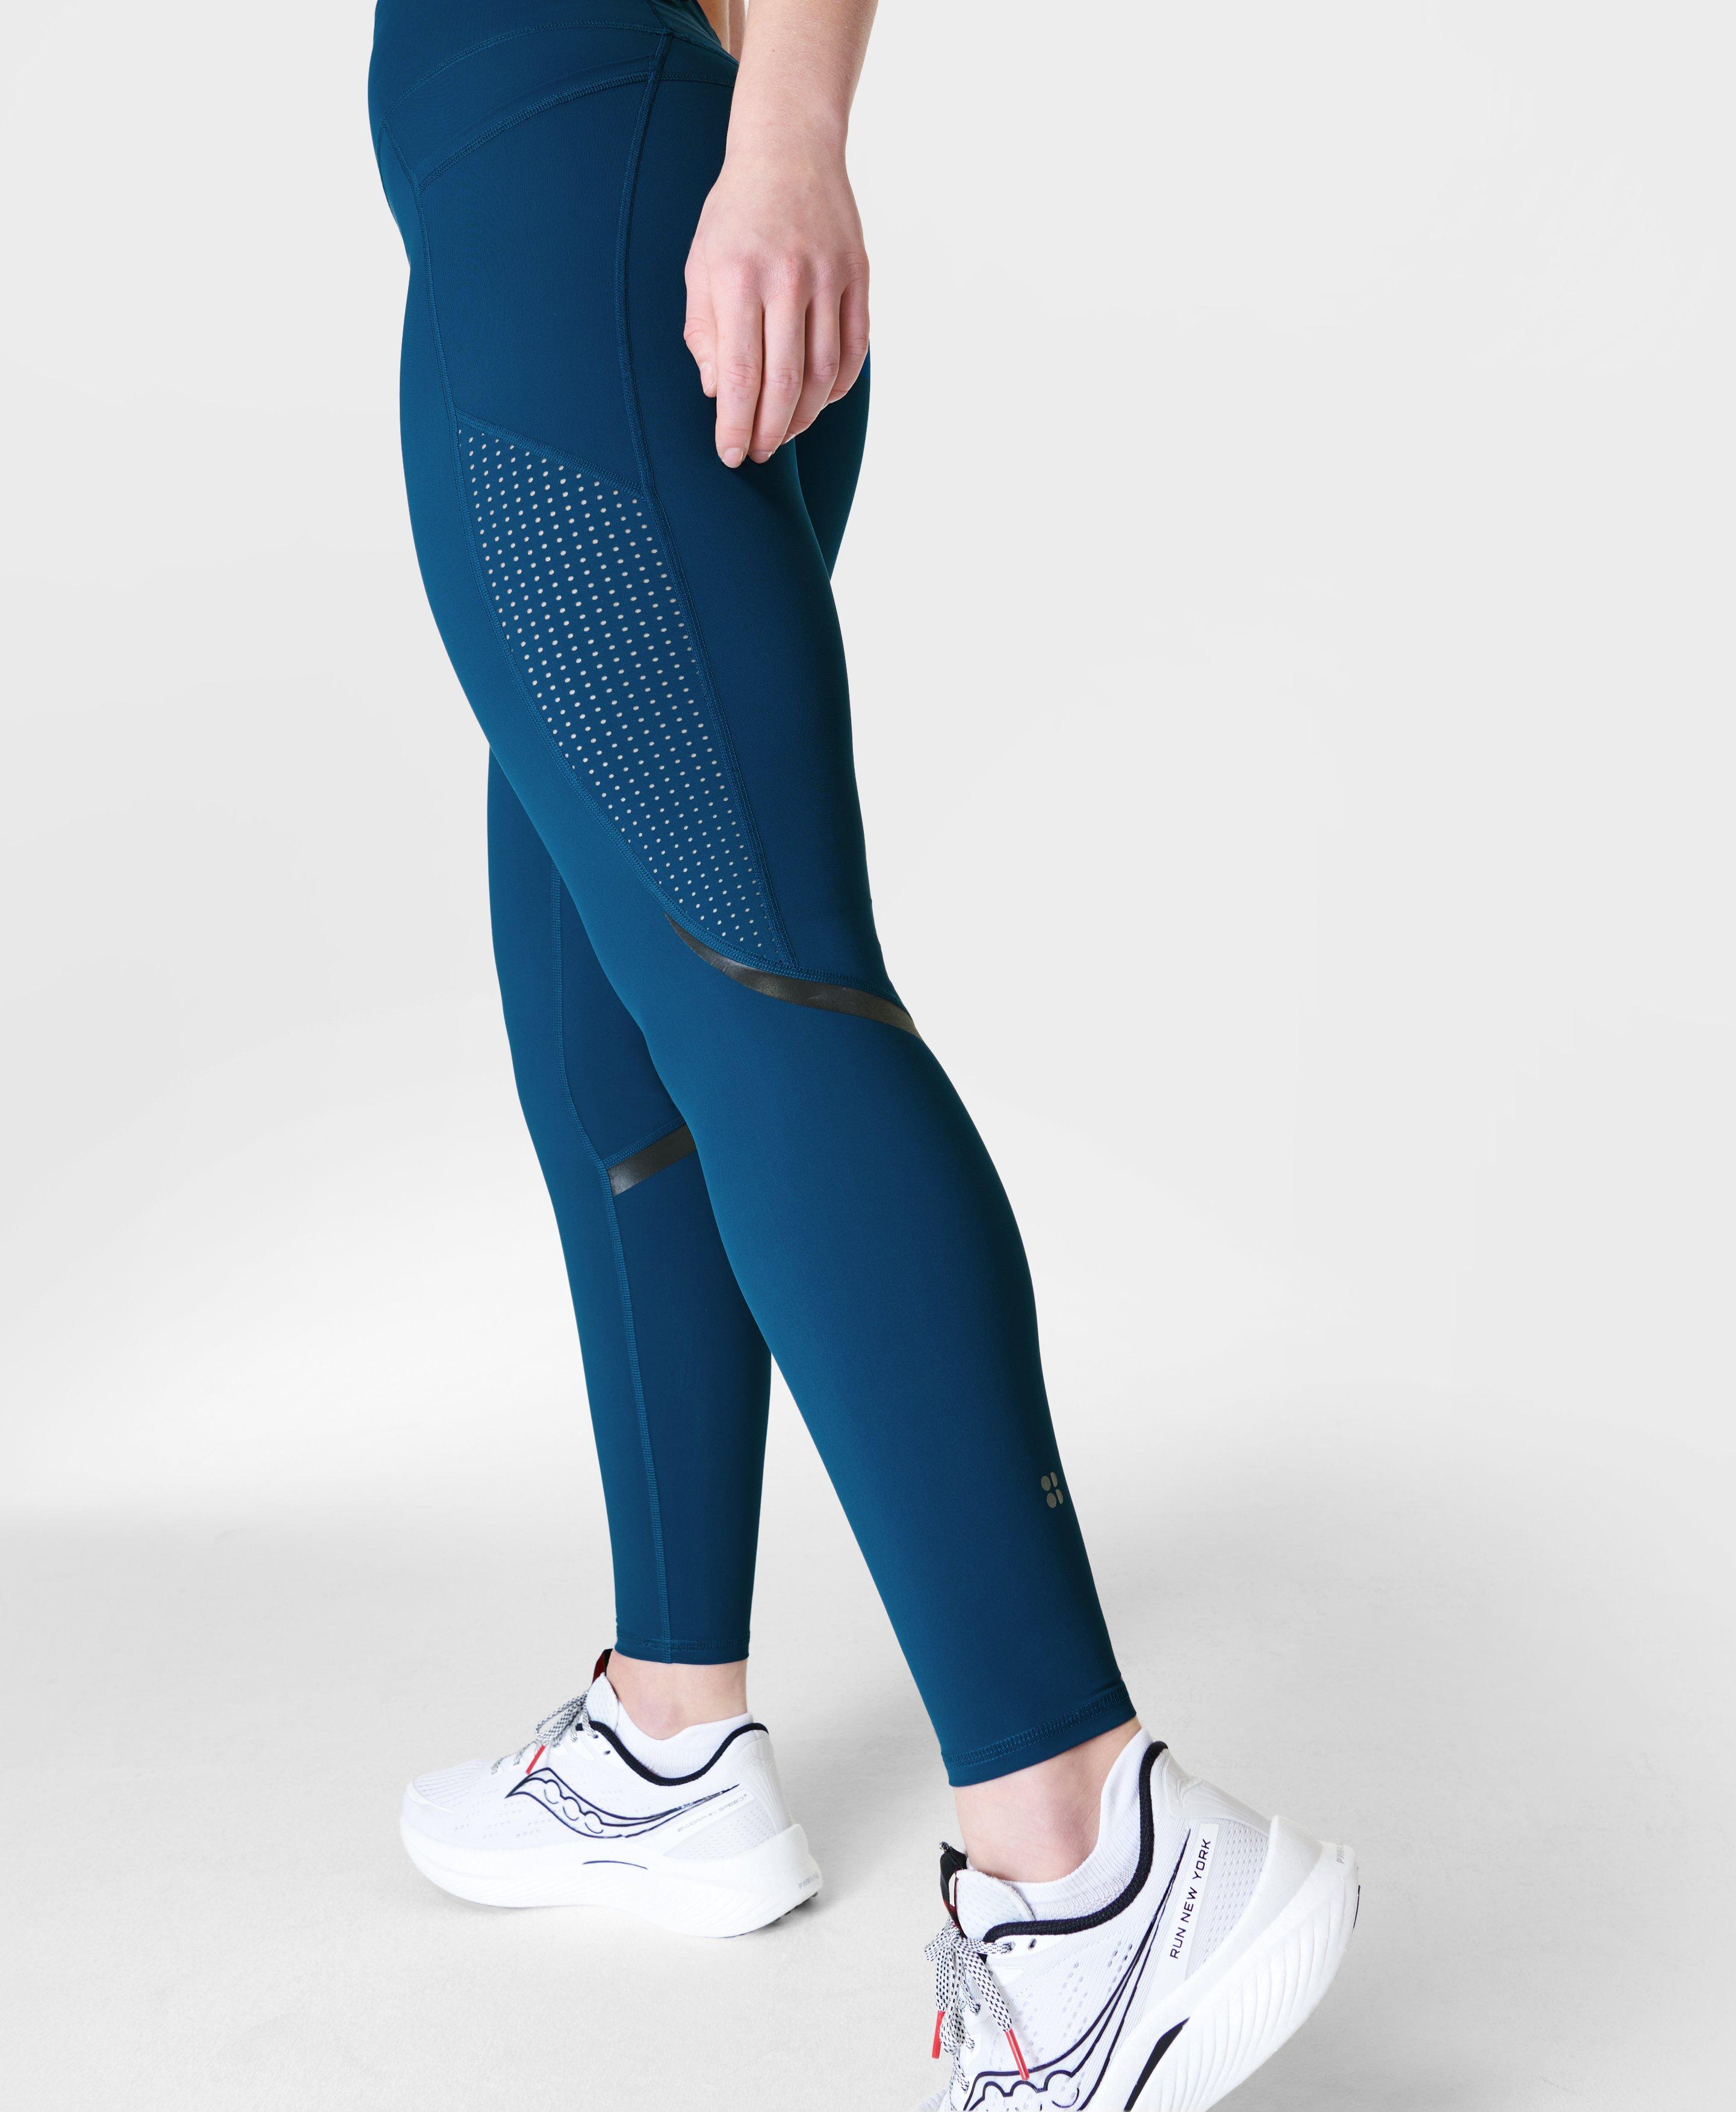 Zero Gravity High-Waisted Running Tight - Deep Blue, Women's Leggings